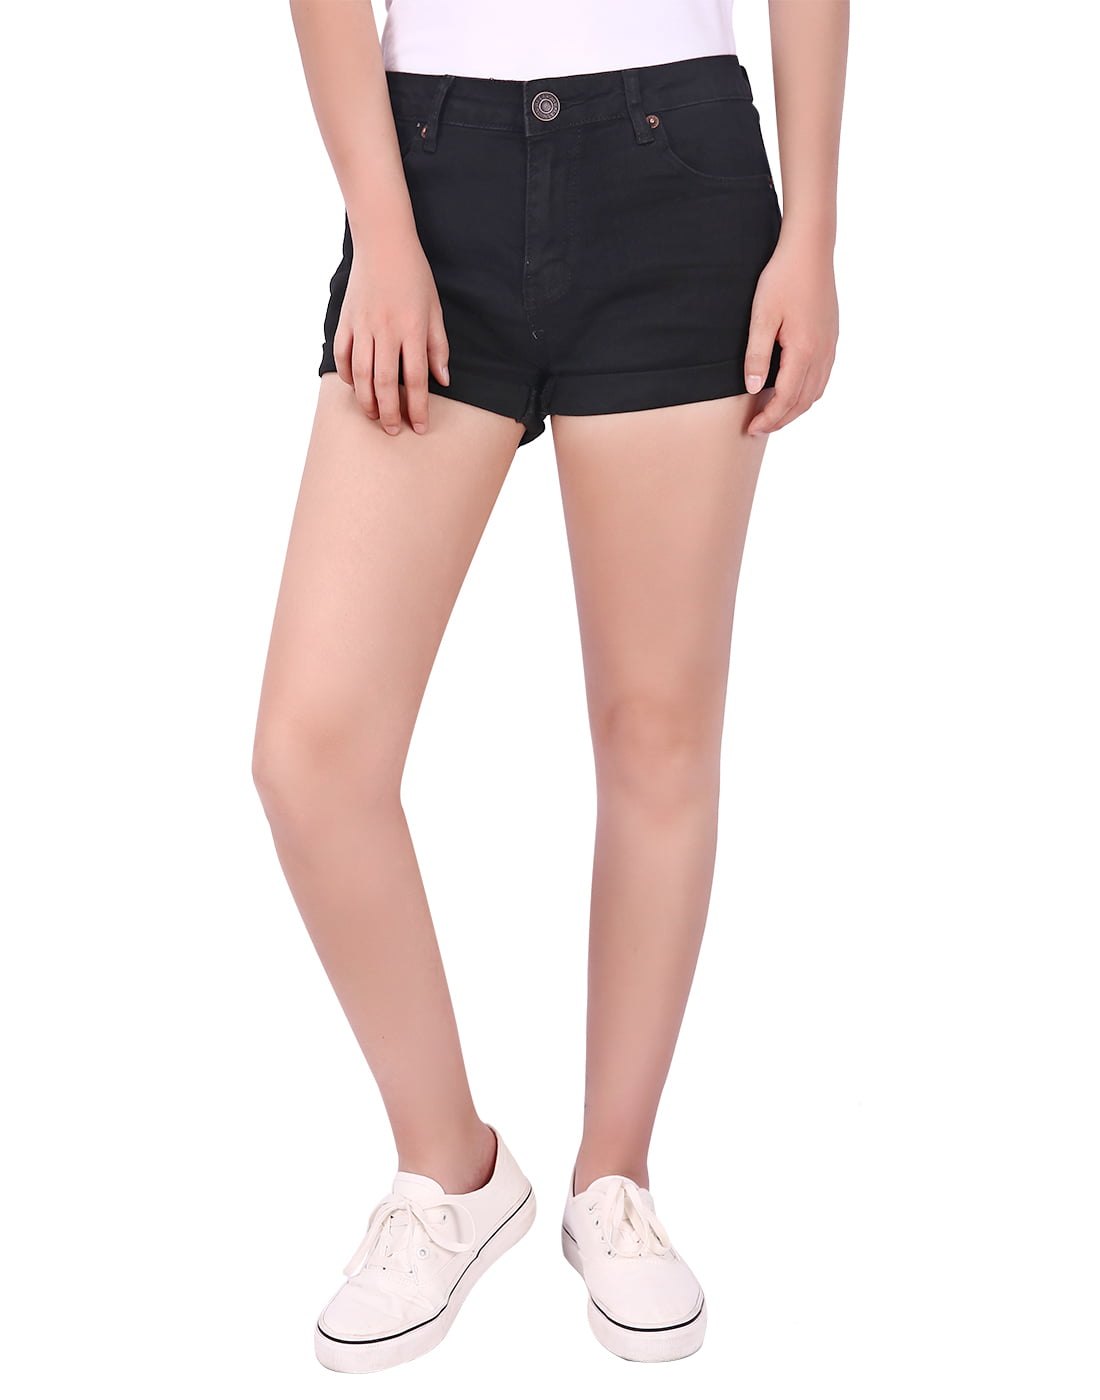 HDE Women's Dress Shorts 3 Inseam Elastic High Waisted Dressy Summer Shorts  Black - S